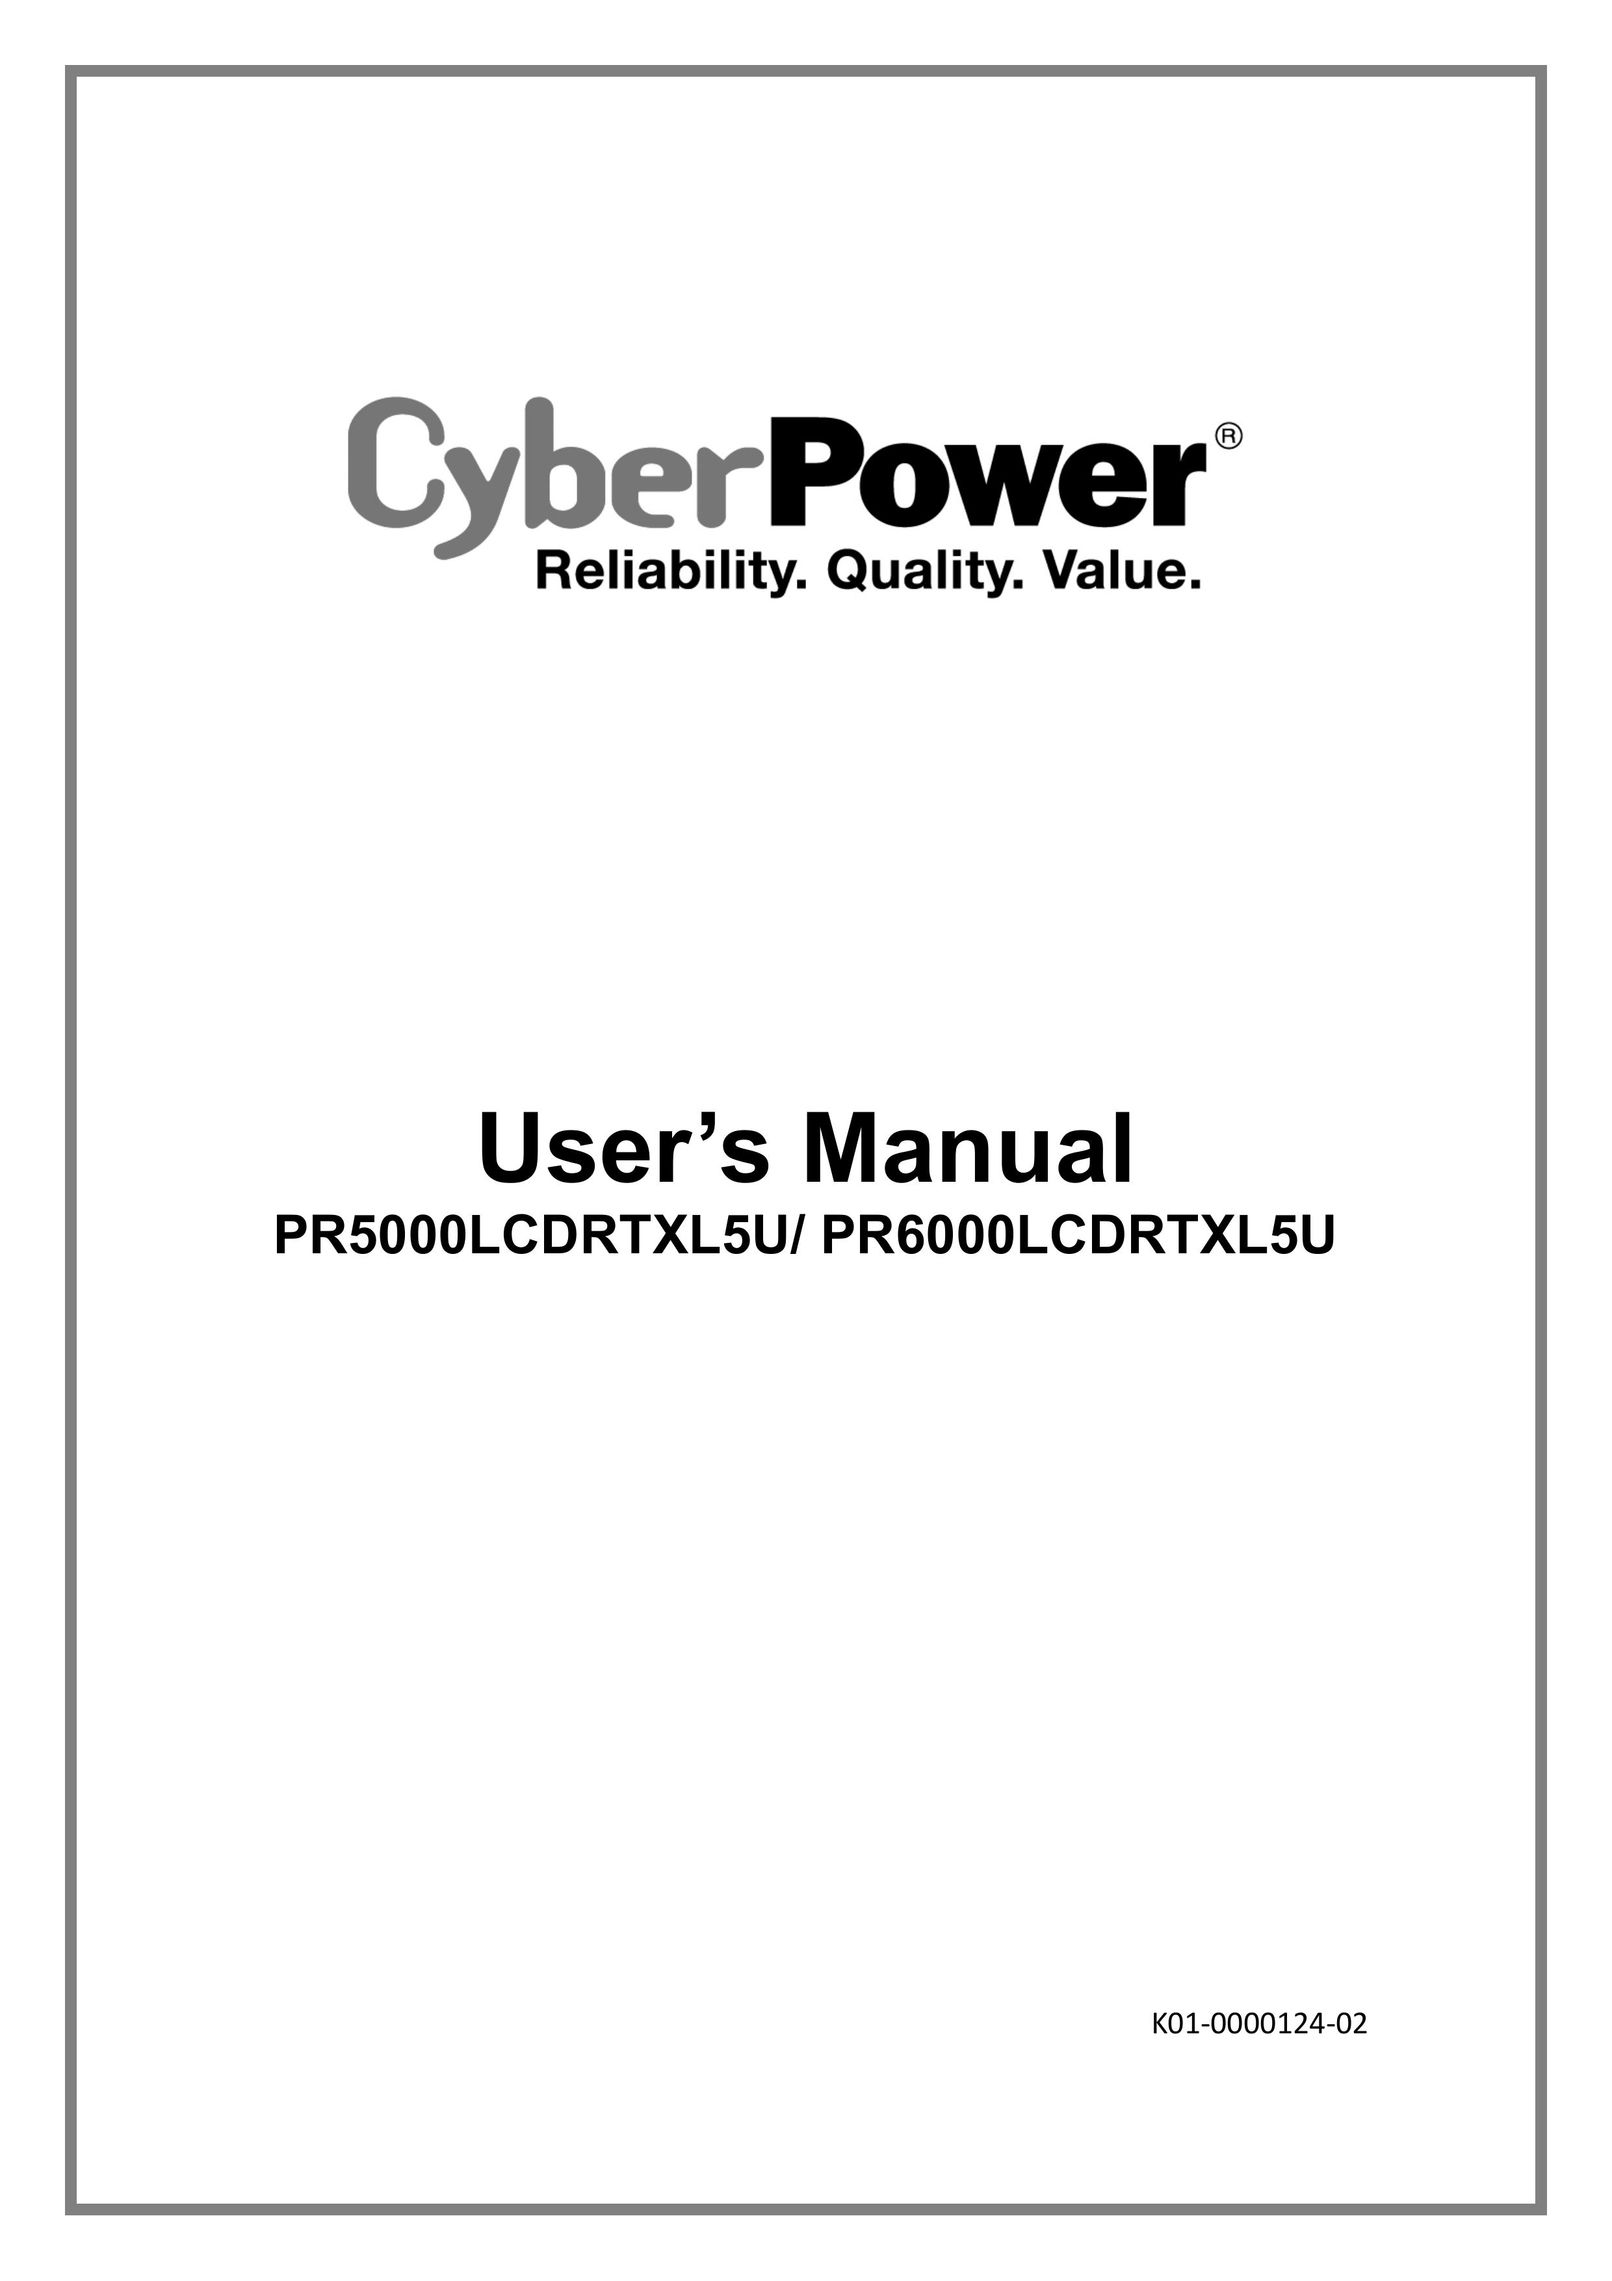 CyberPower PR50000LCDRTXL5U Thermostat User Manual